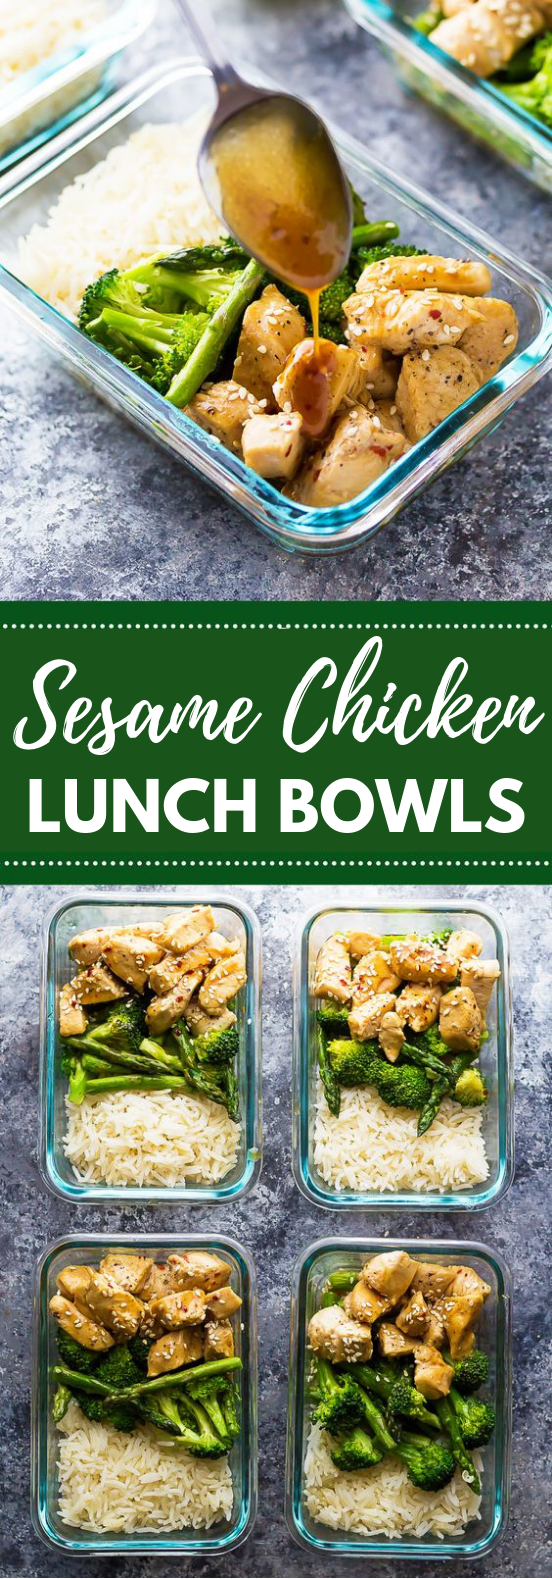 Honey Sesame Chicken Lunch Bowls #Lunch #LunchBowls